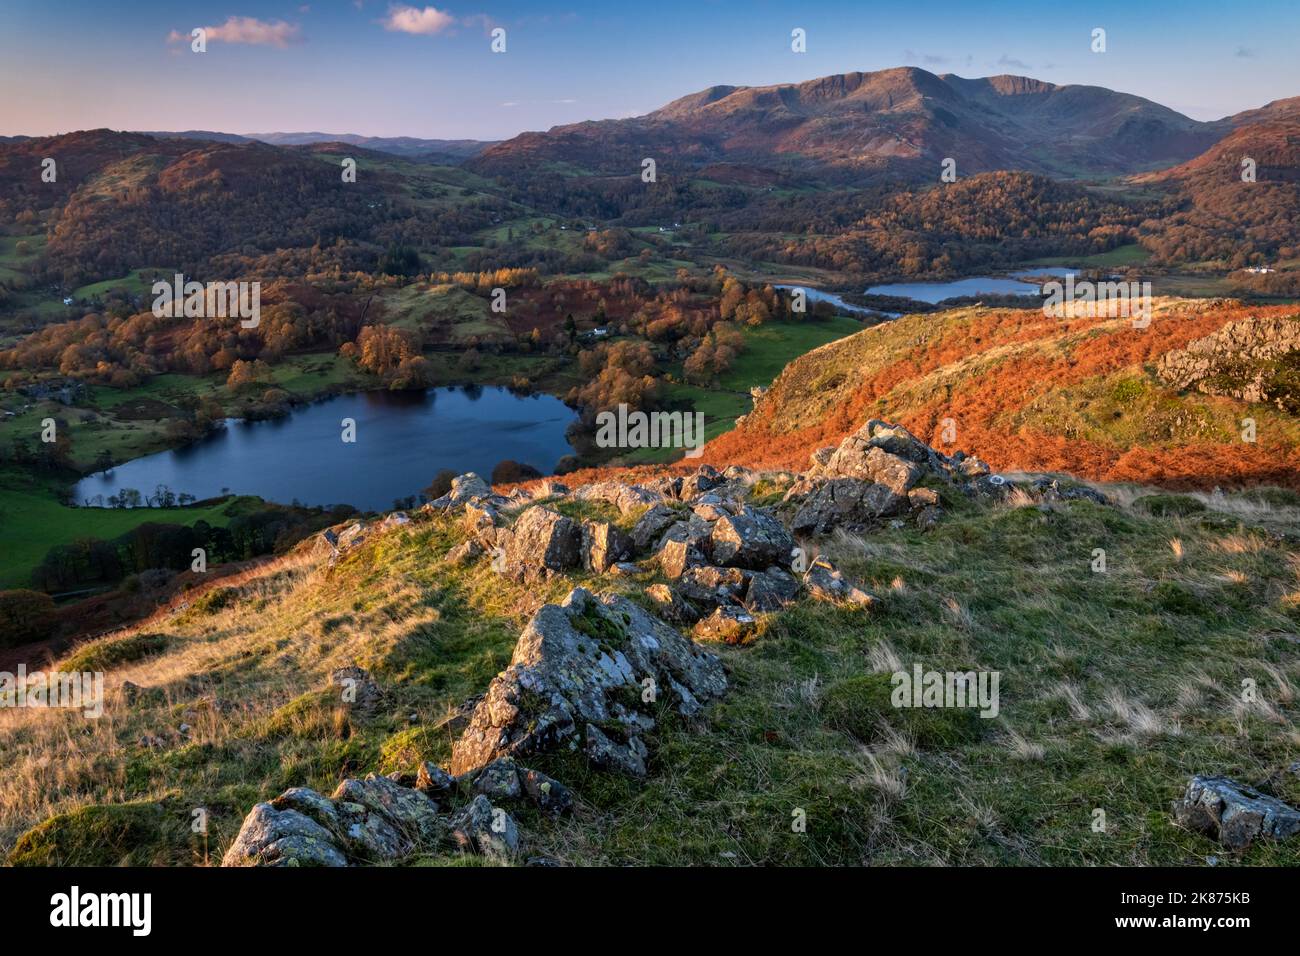 Loughrigg Tarn, Elter Water et Wetherlam de Loughrigg tomba en automne, Parc national de Lake District, UNESCO, Cumbria, Angleterre Banque D'Images